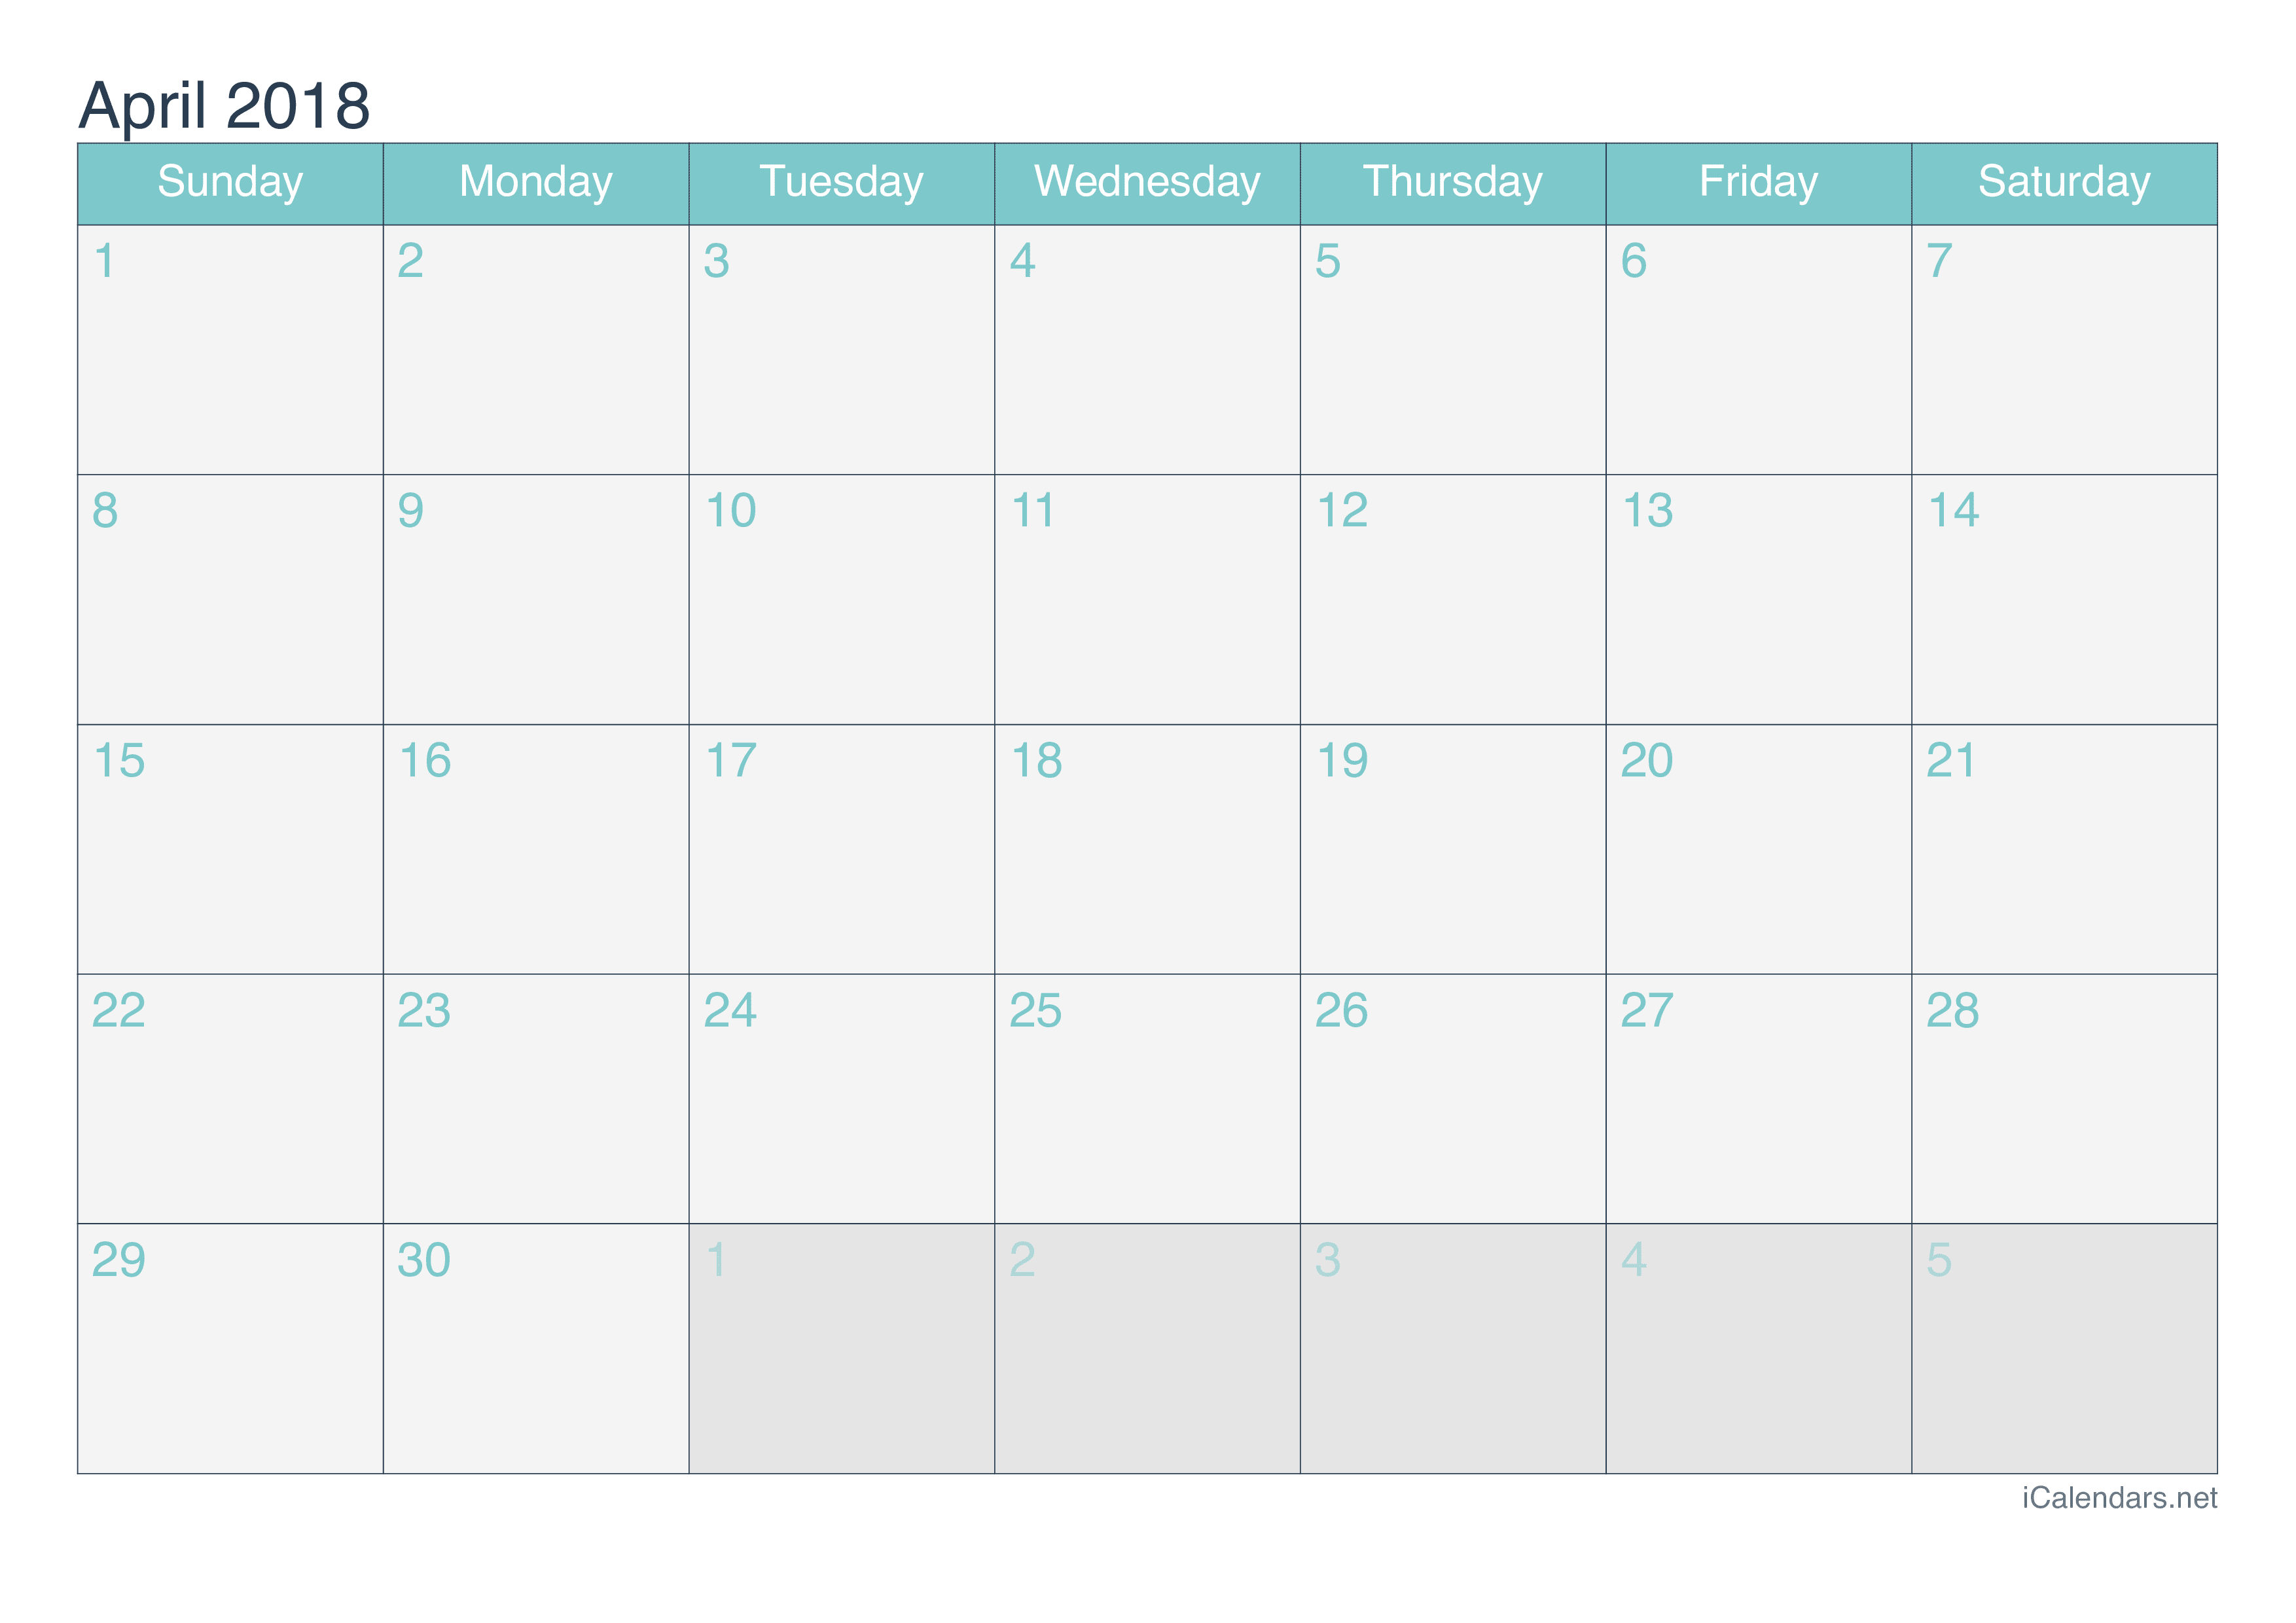 april-2018-printable-calendar-icalendars